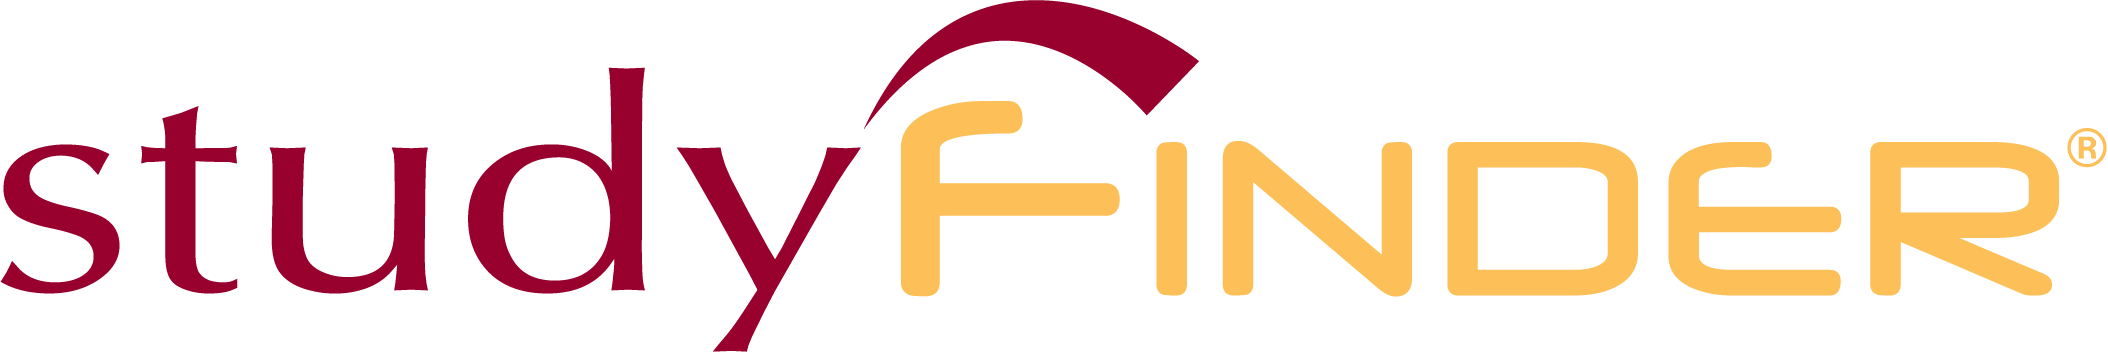 studyfinder logo